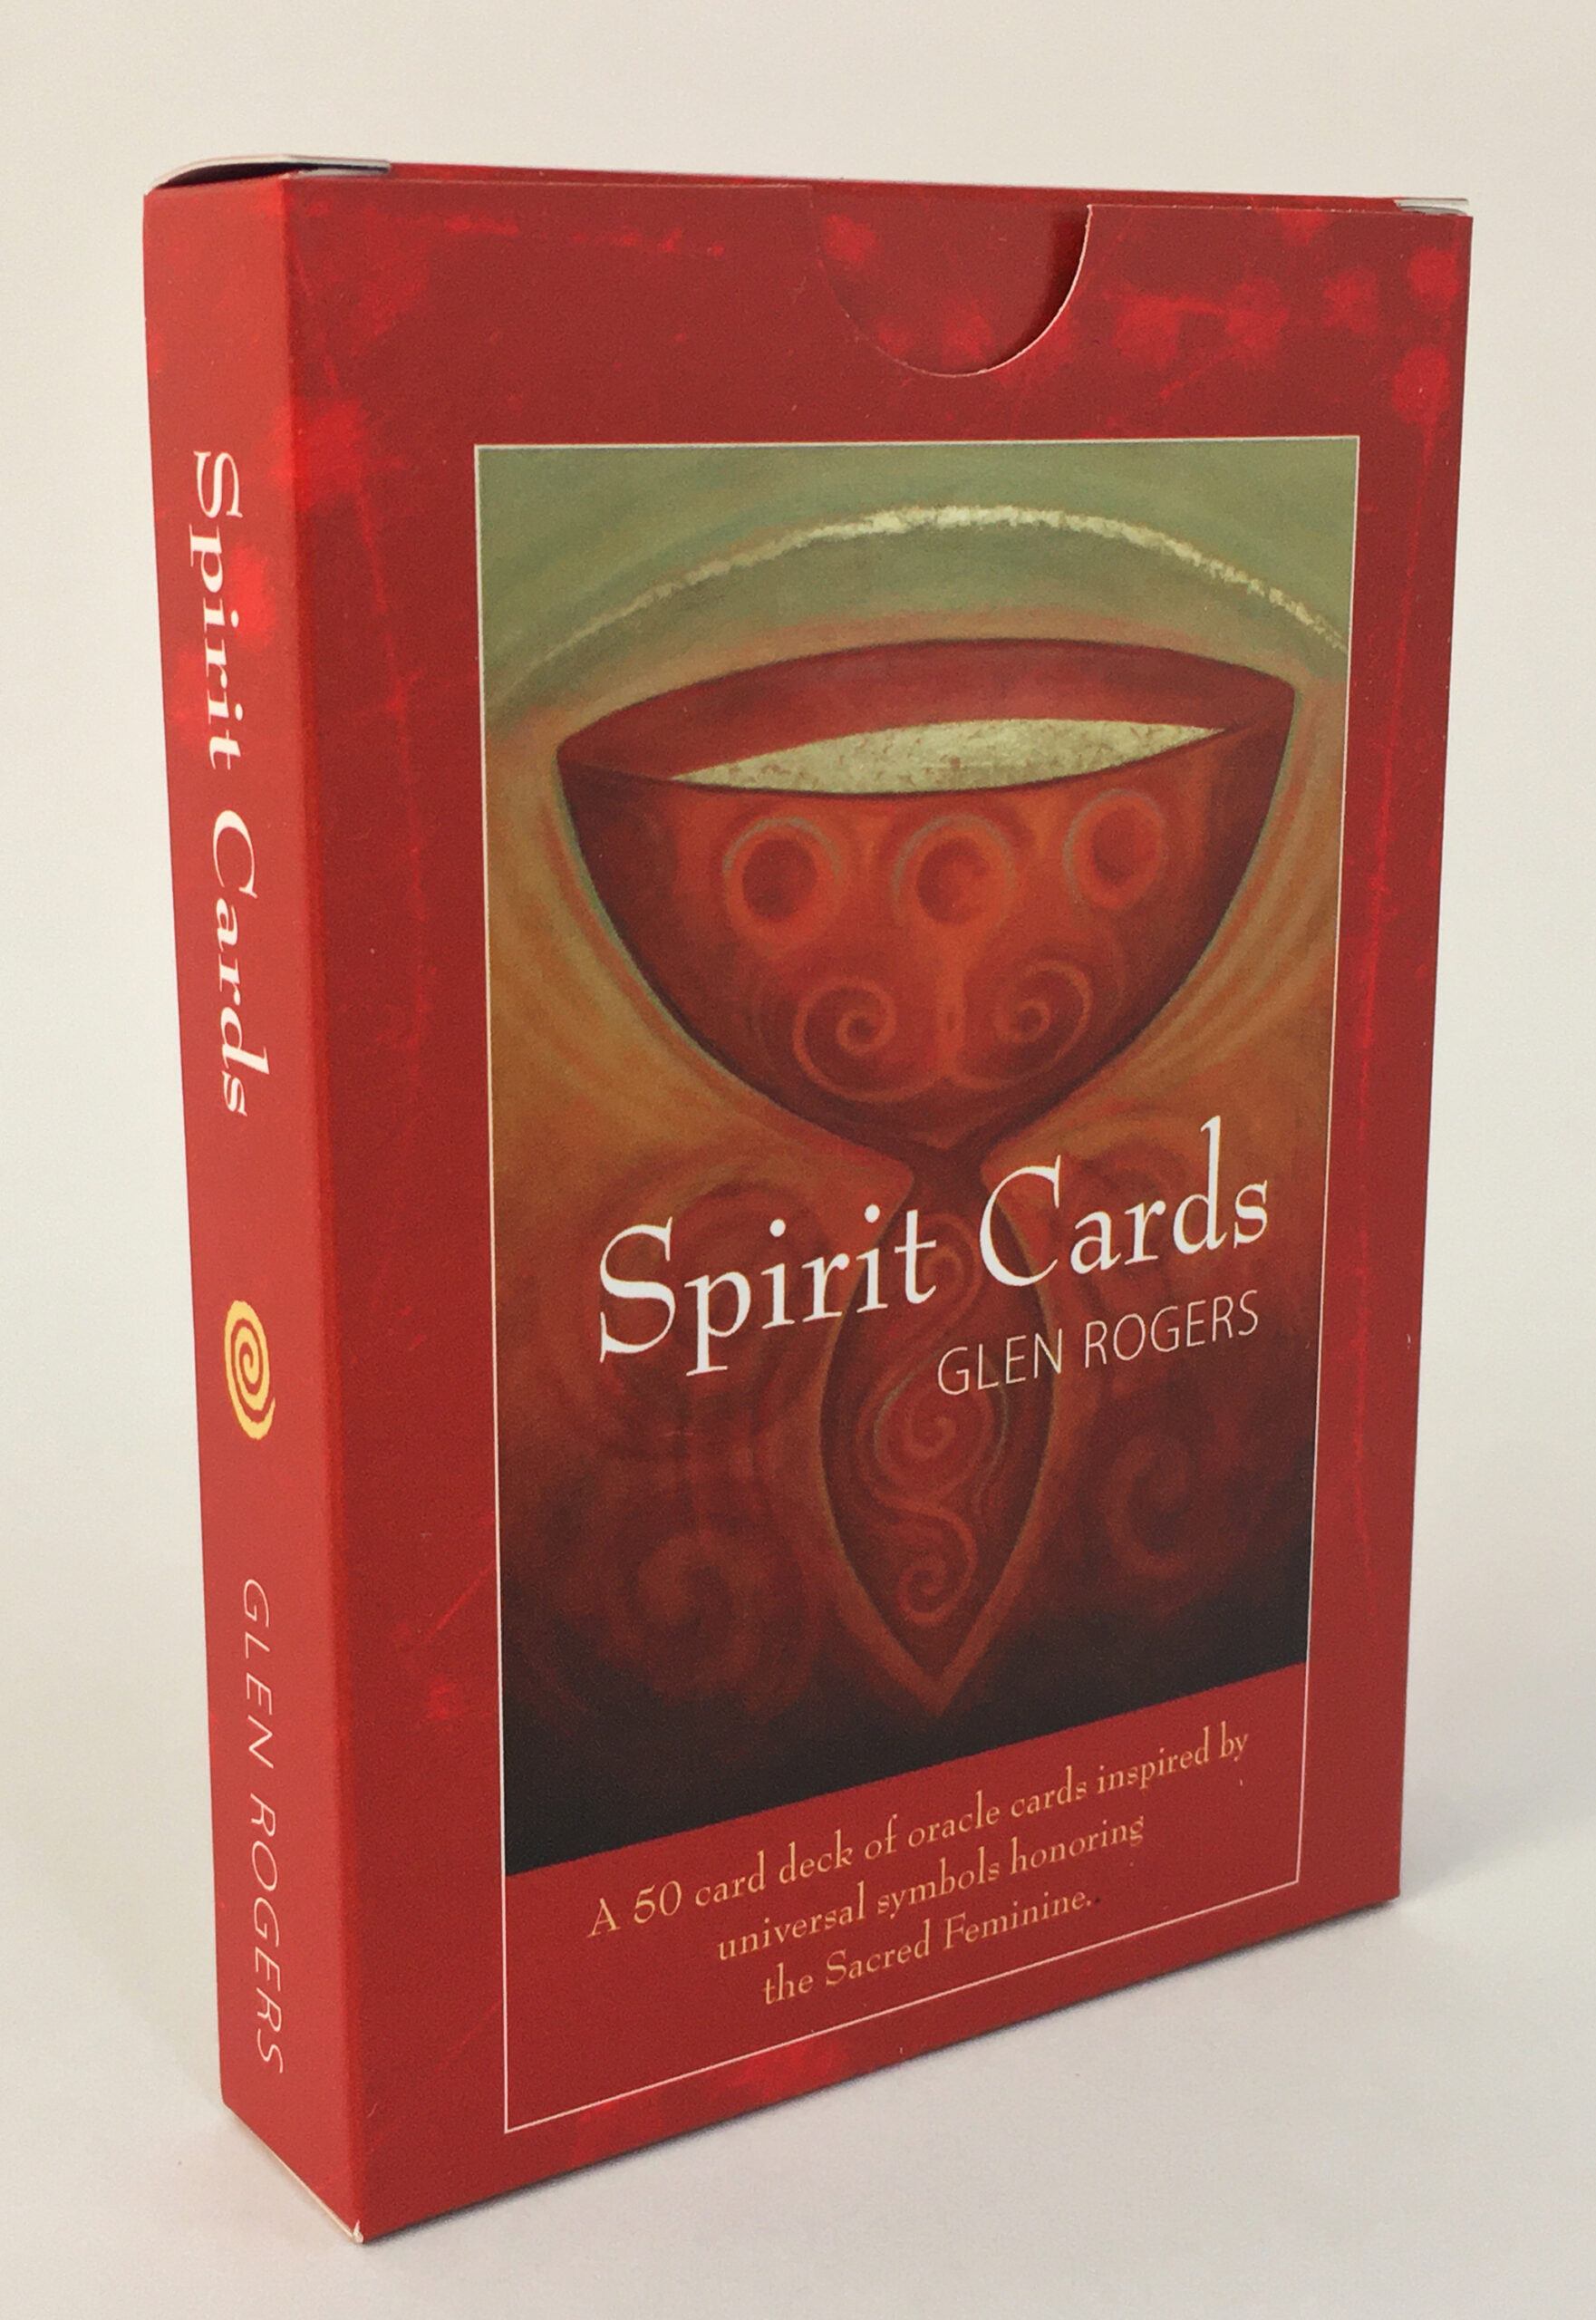 Spirit Cards by Glen Rogers